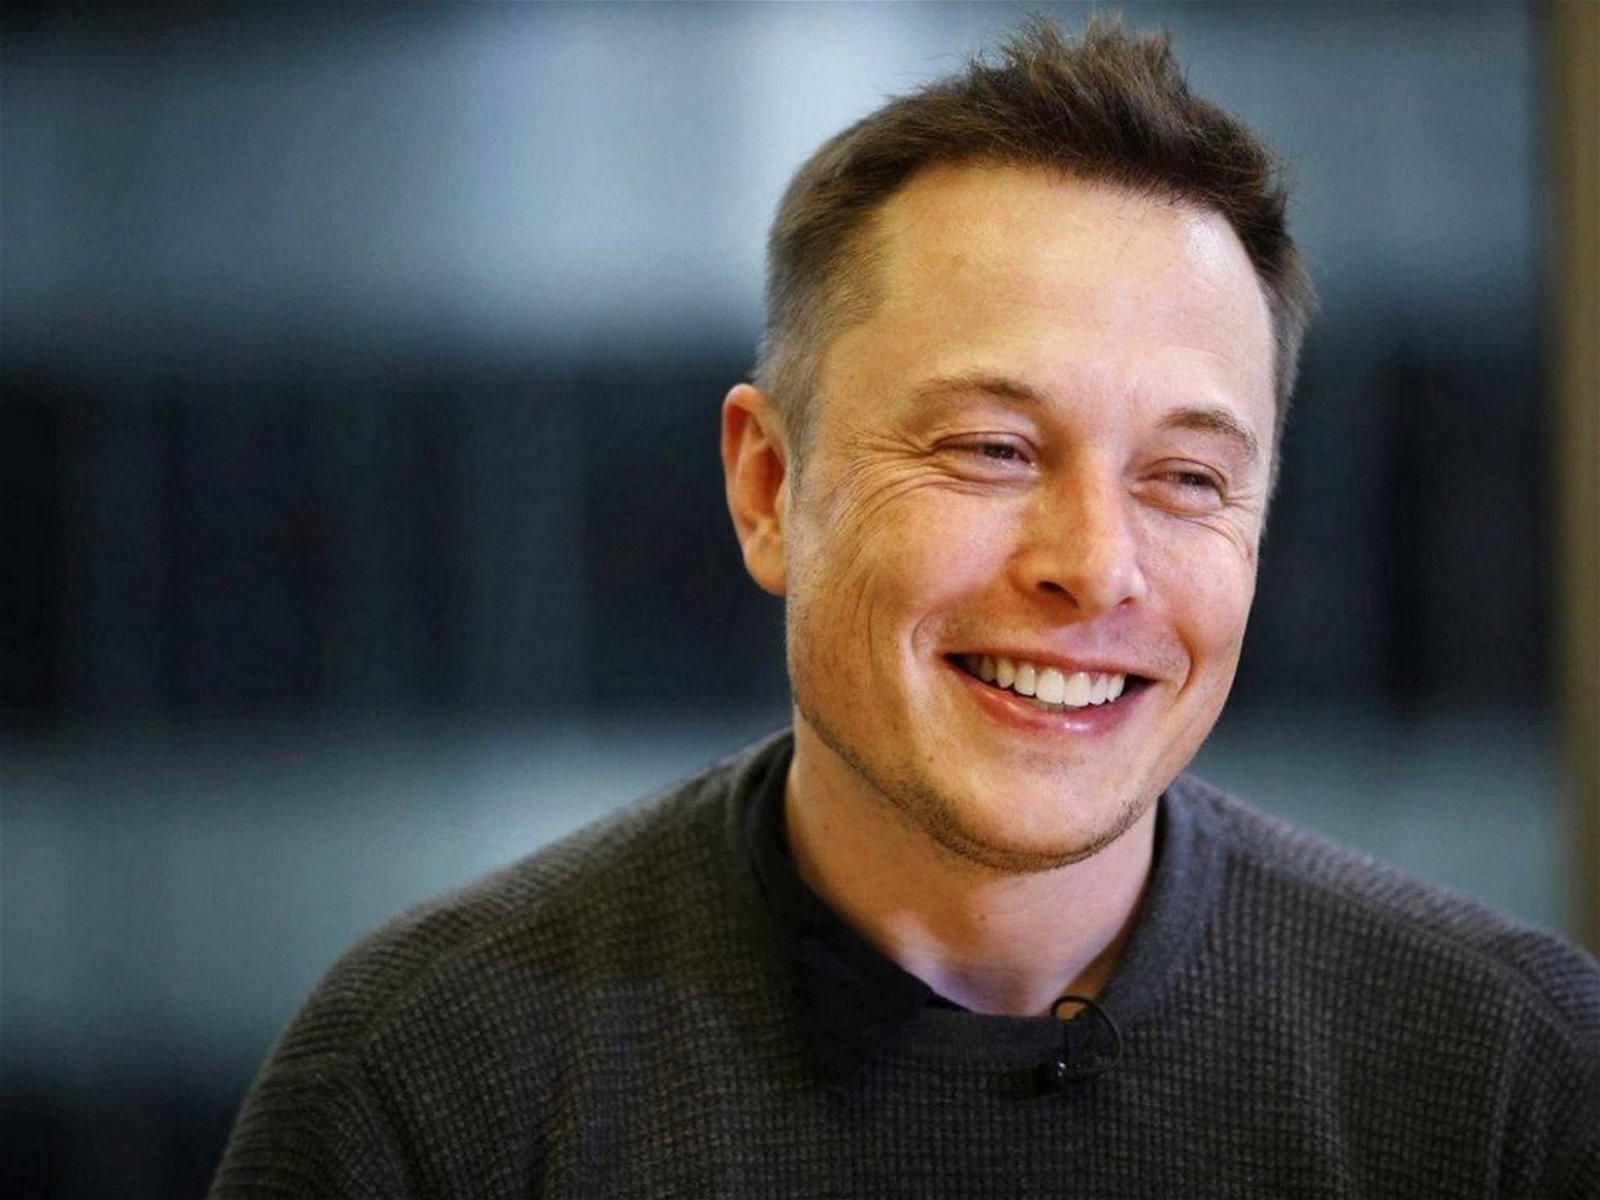 Immagine di Tesla Full Self-Driving arriverà nel 2021, secondo Elon Musk